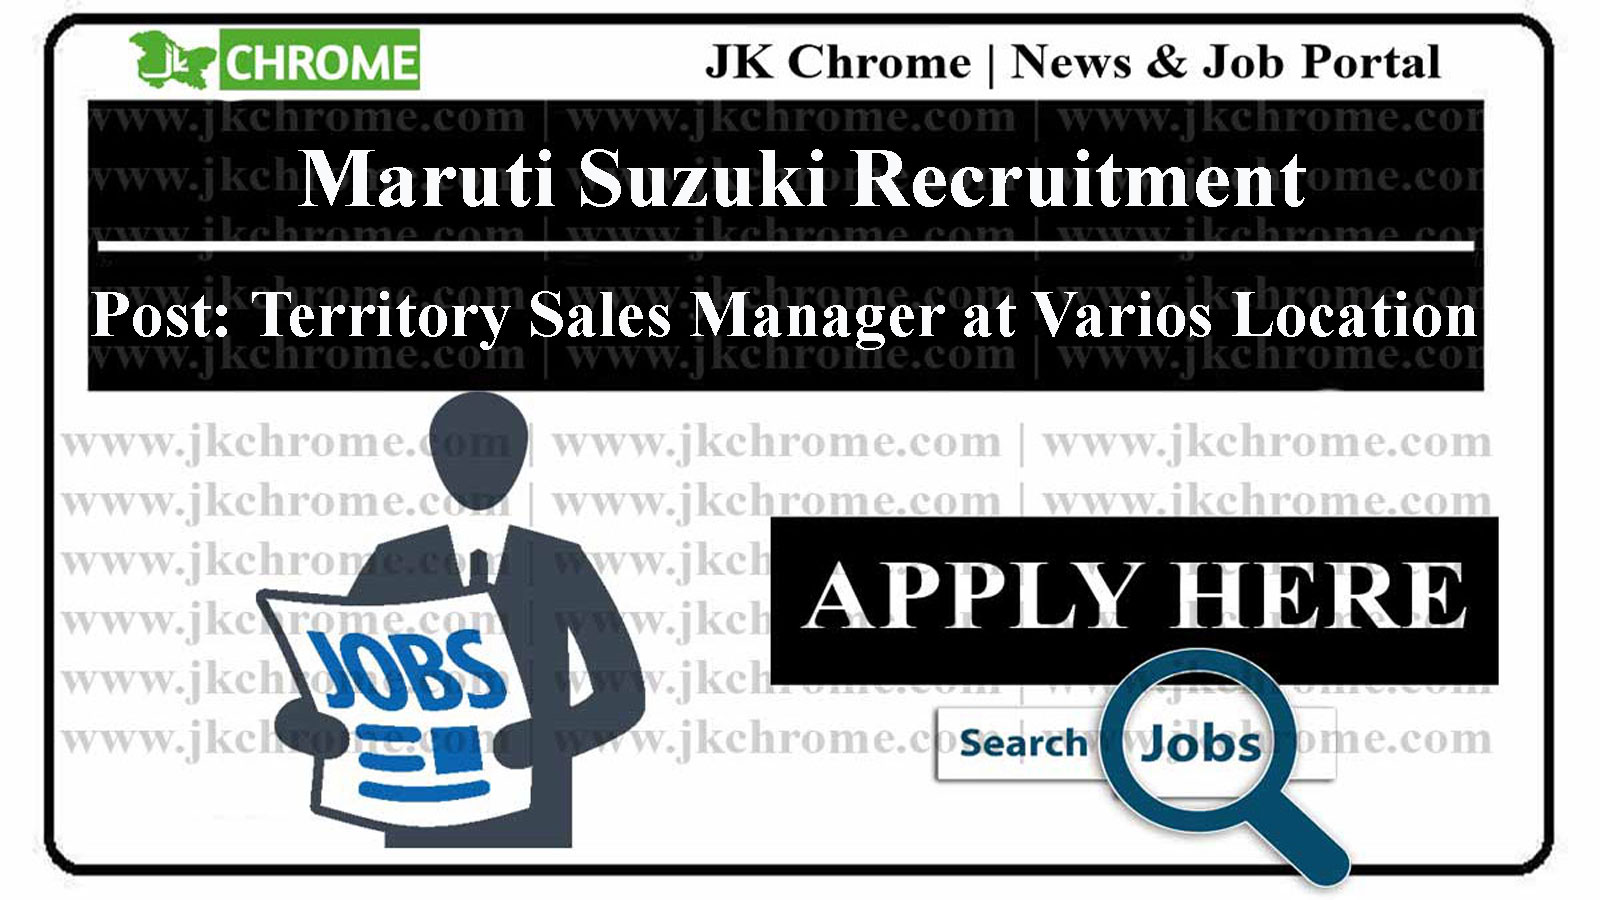 Maruti Suzuki Recruitment of Territory Sales Manager at various locations